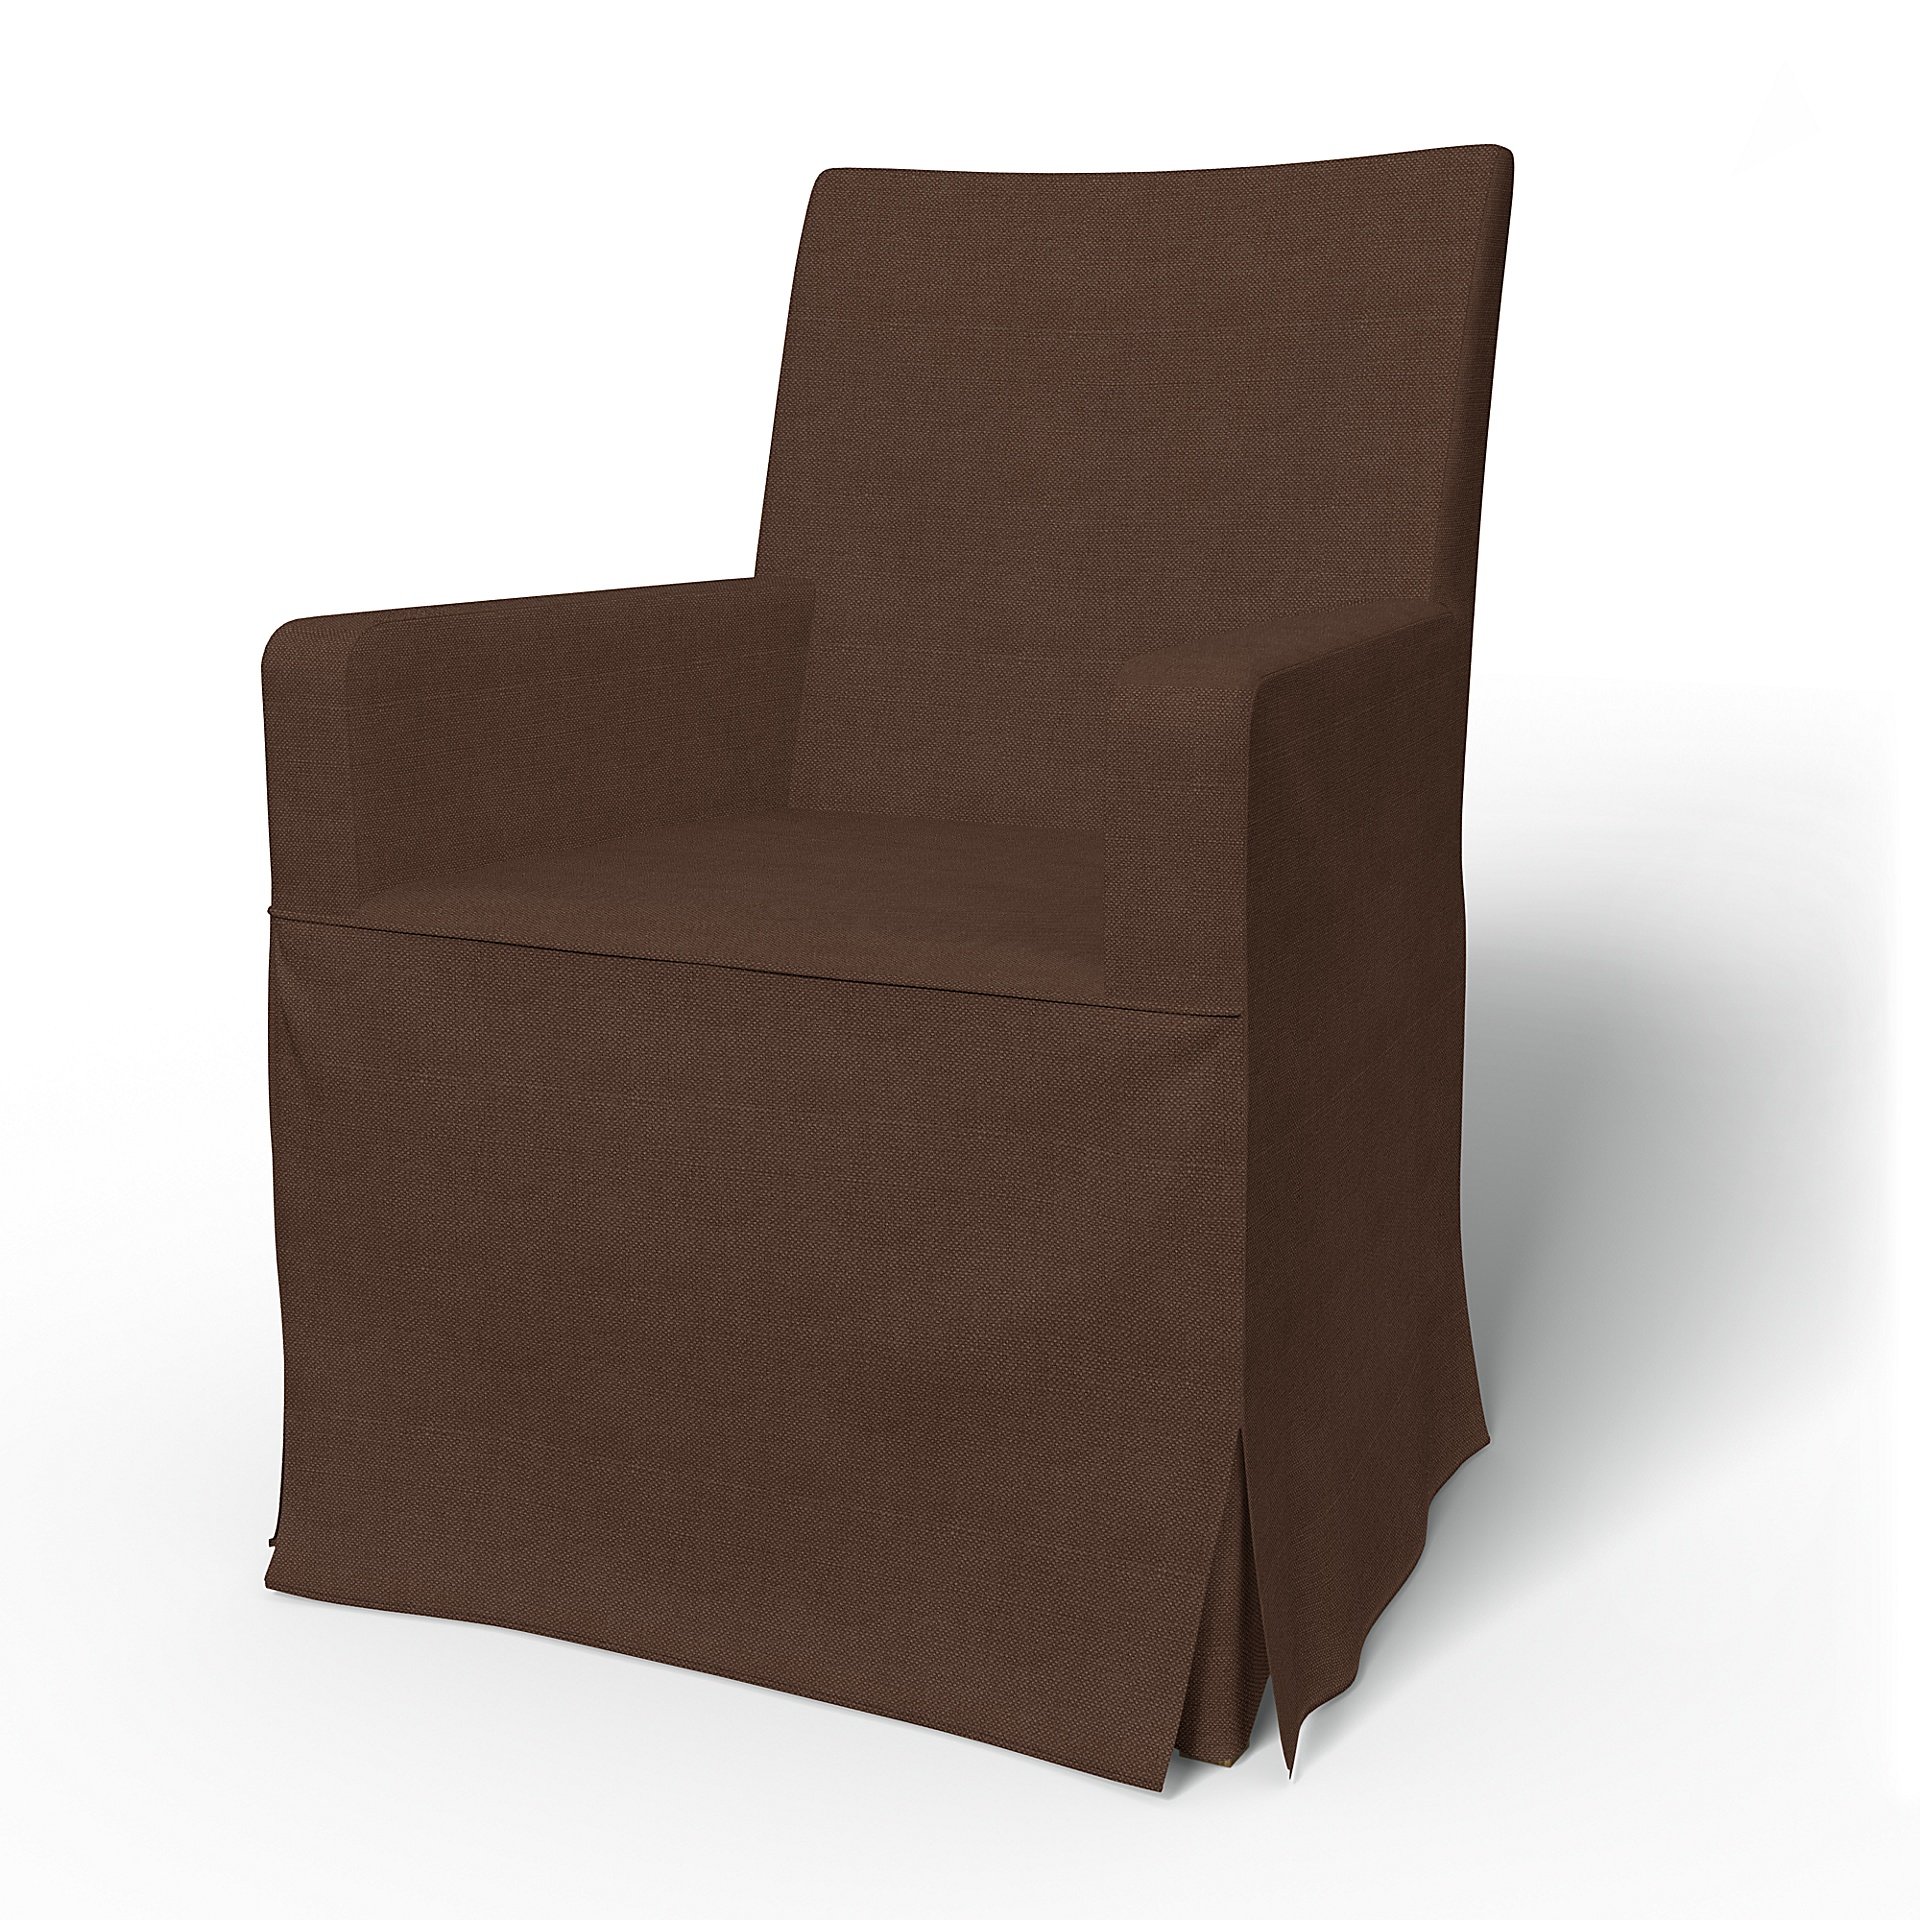 IKEA - Henriksdal, Chair cover w/ armrests, long skirt box pleat, Chocolate, Linen - Bemz